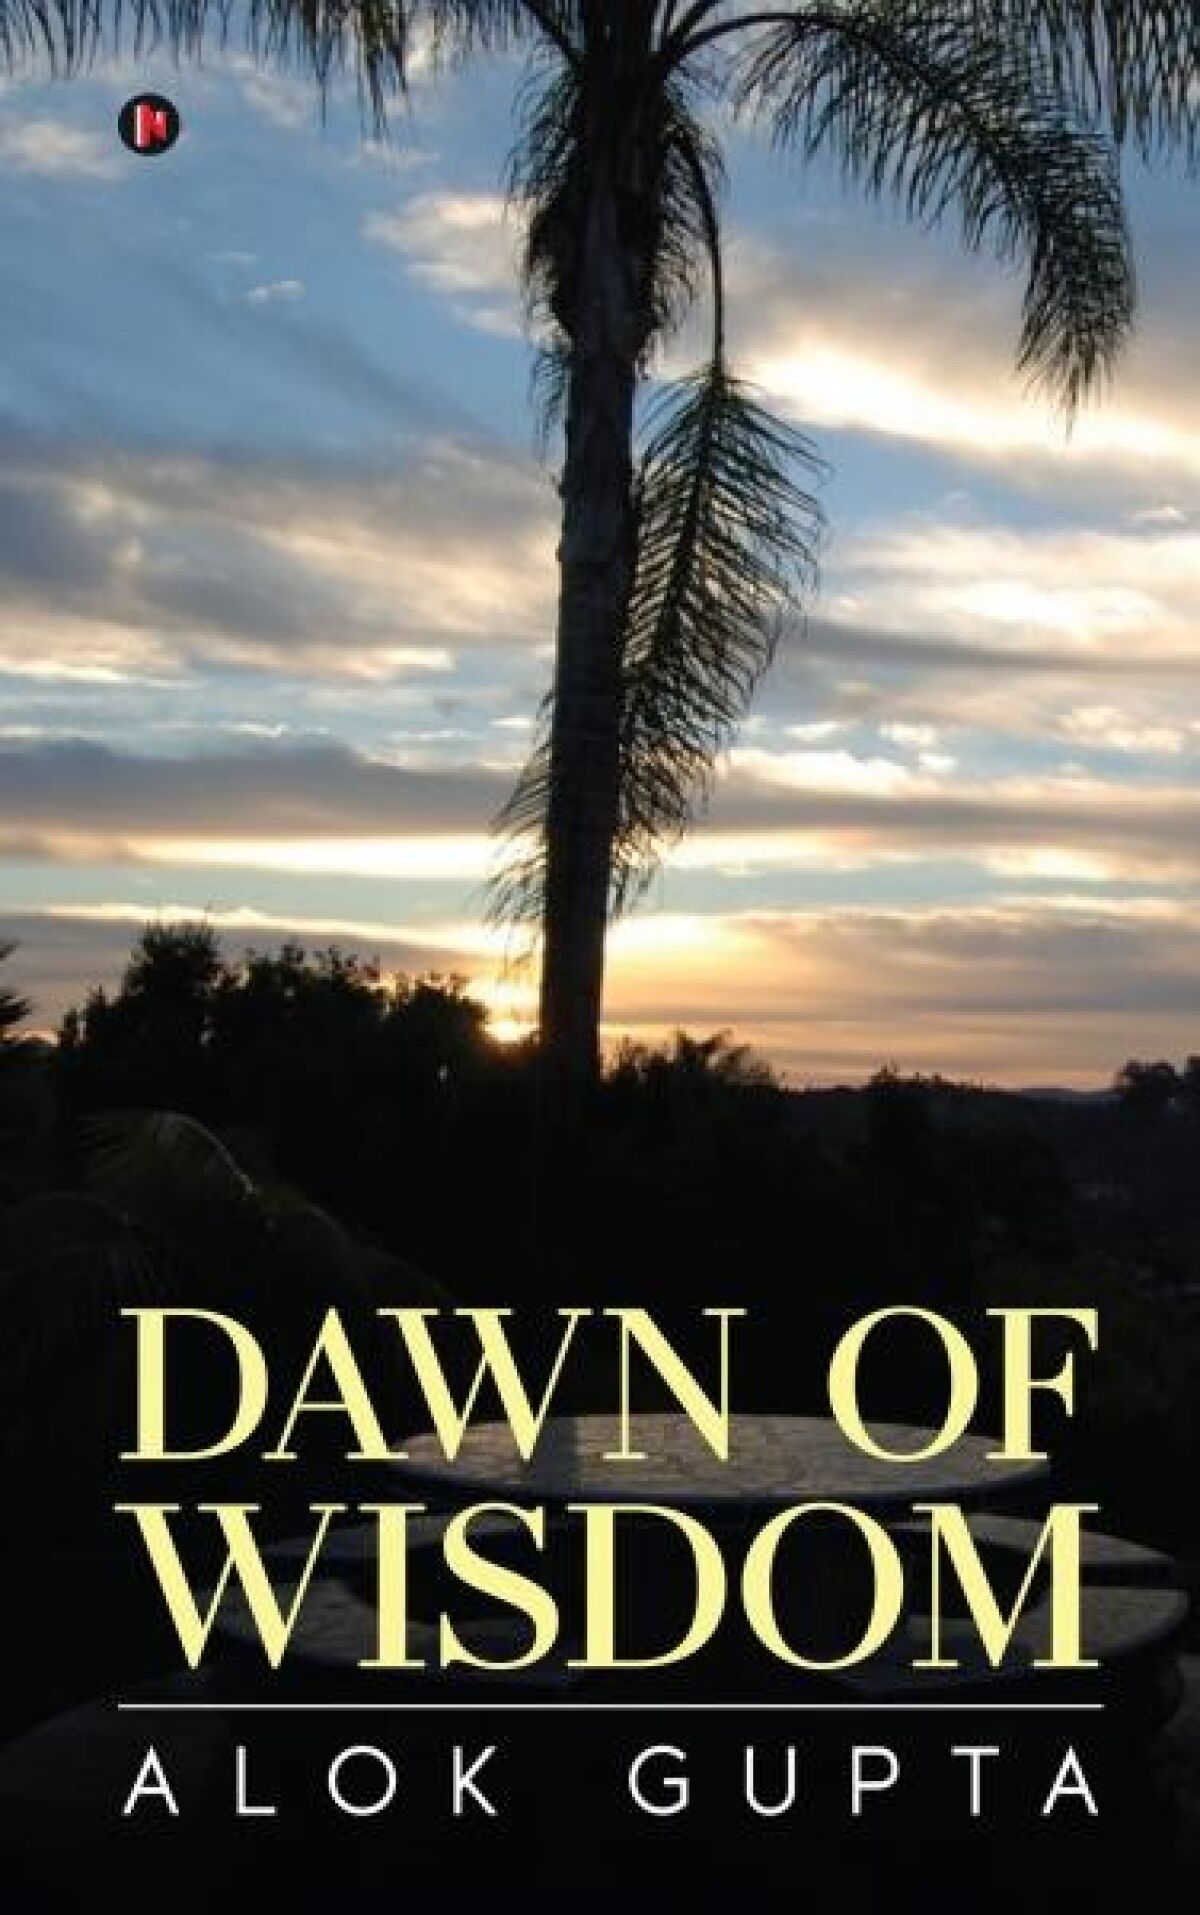 The cover of “Dawn of Wisdom” by Alok Gupta